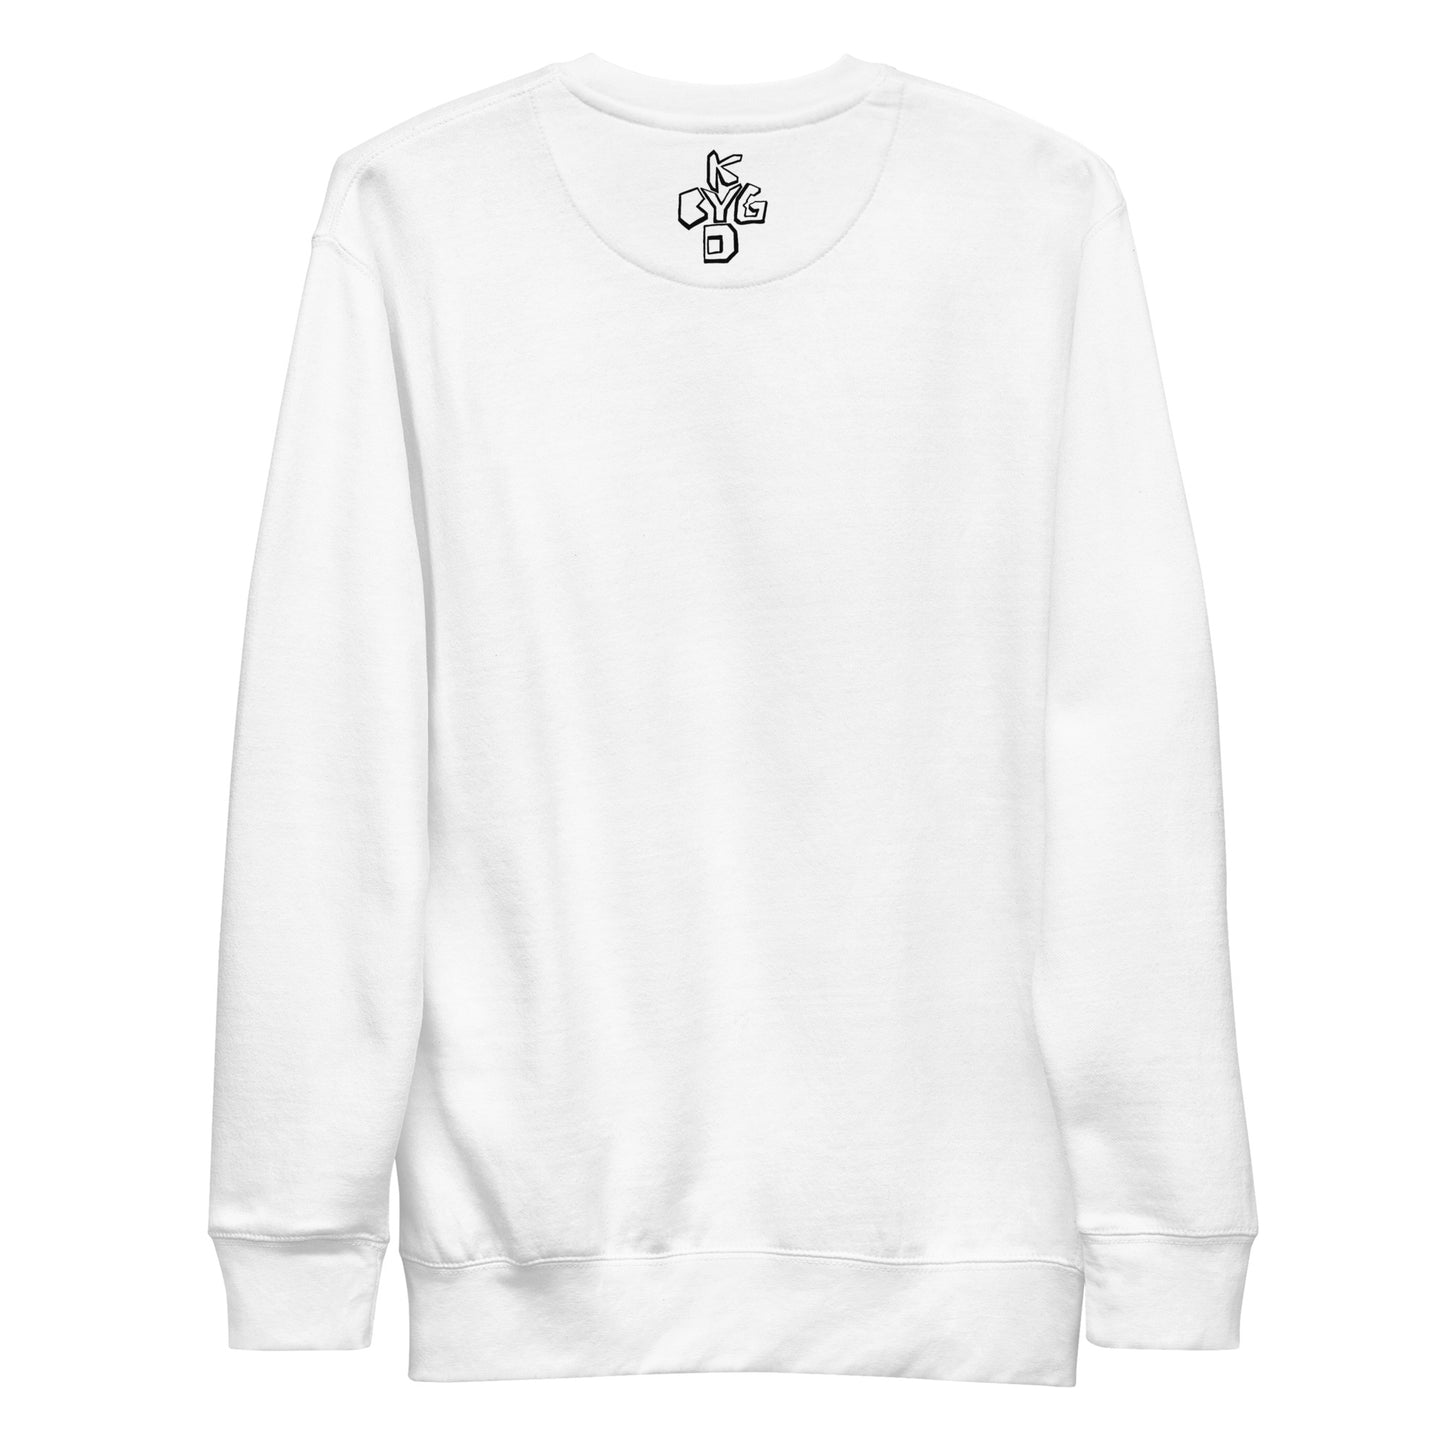 Tony The Thiger - Unisex Premium Sweatshirt (S-3XL)